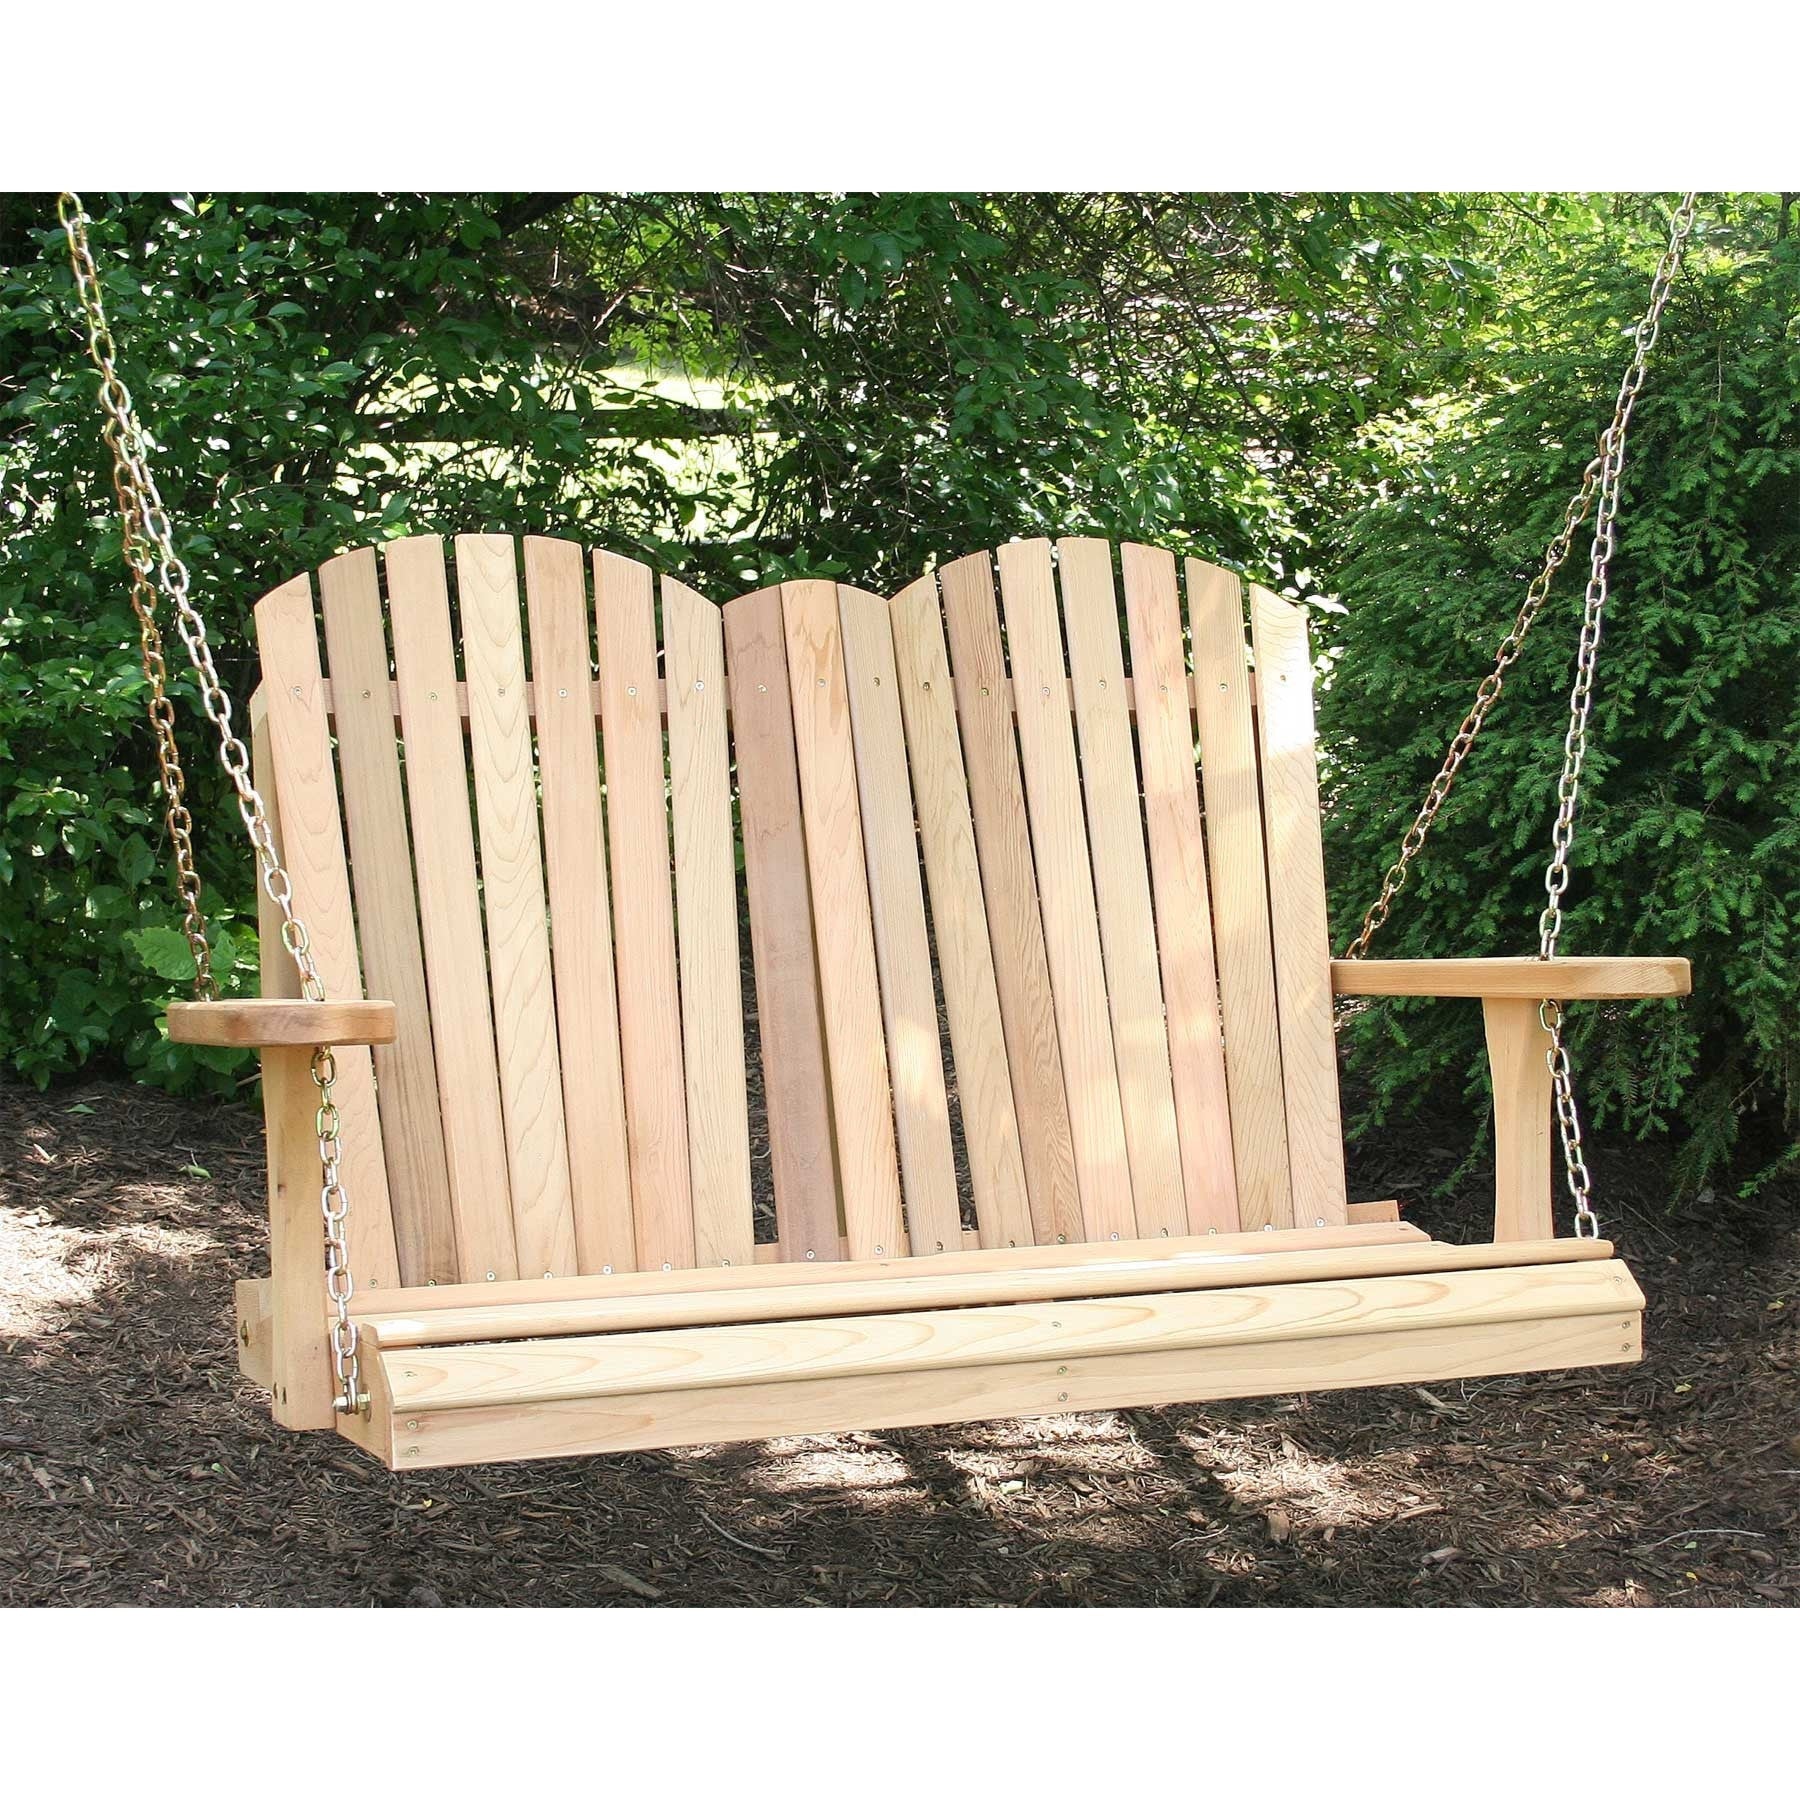 Cedar Porch Swing by Creekvine Designs - Swings and More